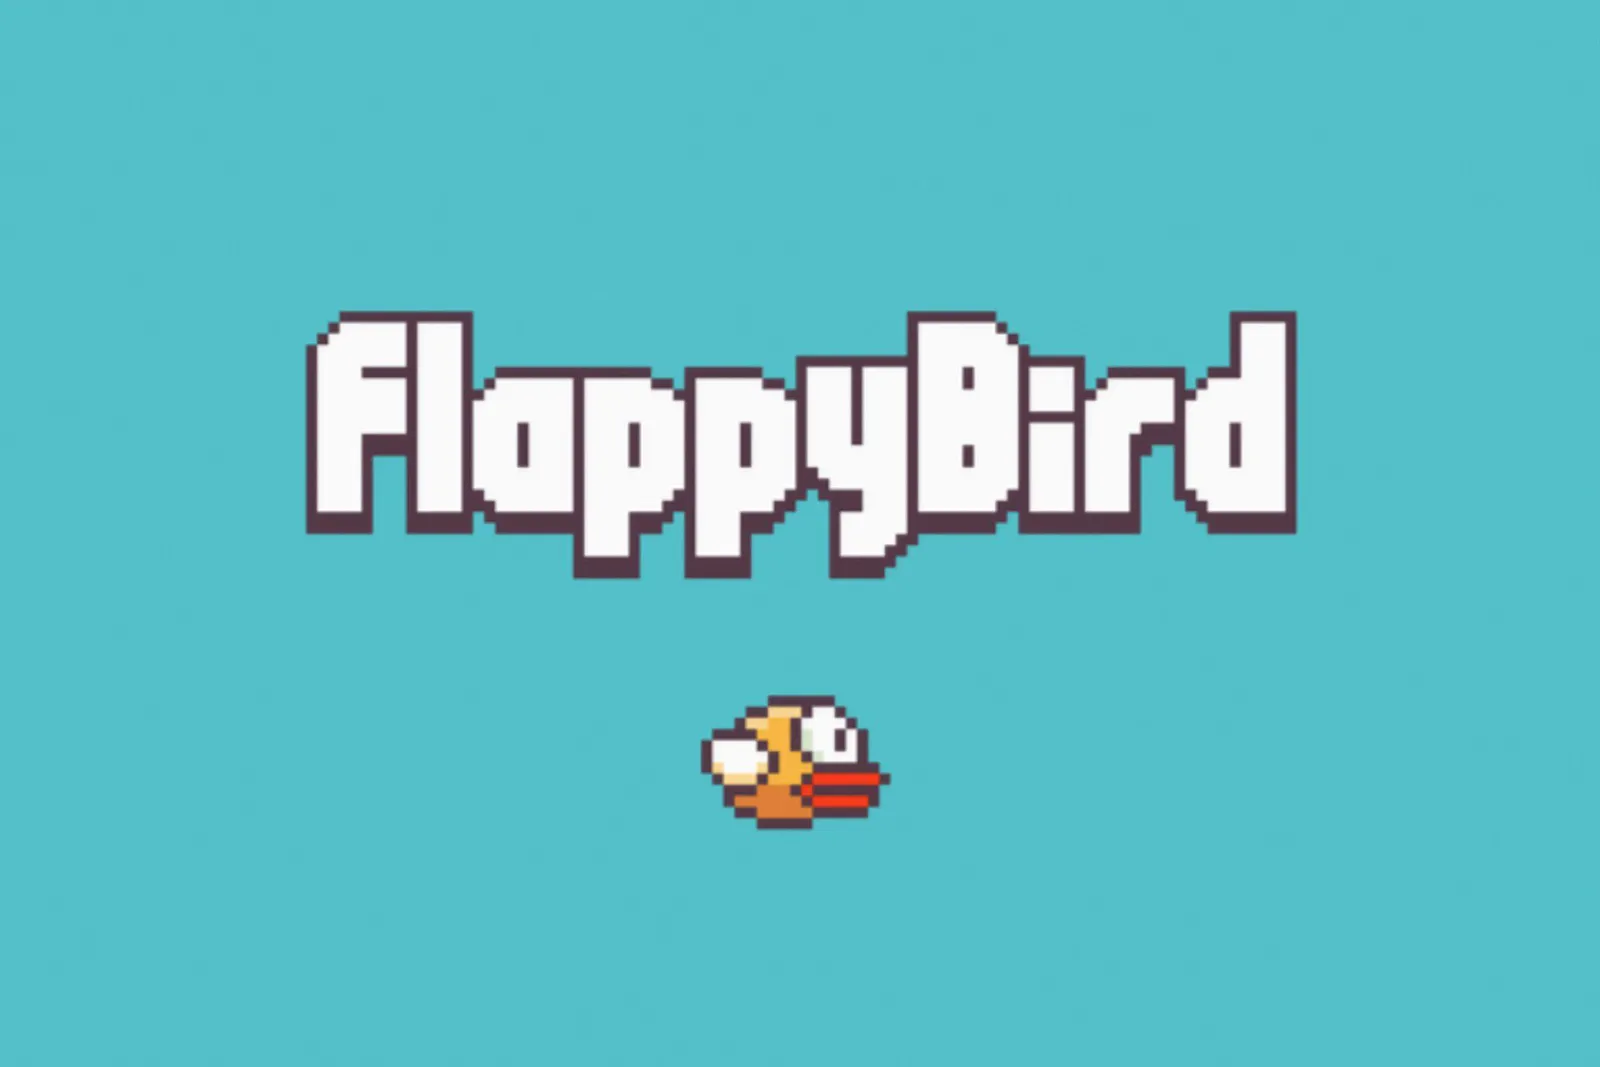 FLAPPY BIRD UNIVERSE - Play UNBLOCKED FLAPPY BIRD UNIVERSE on DooDooLove